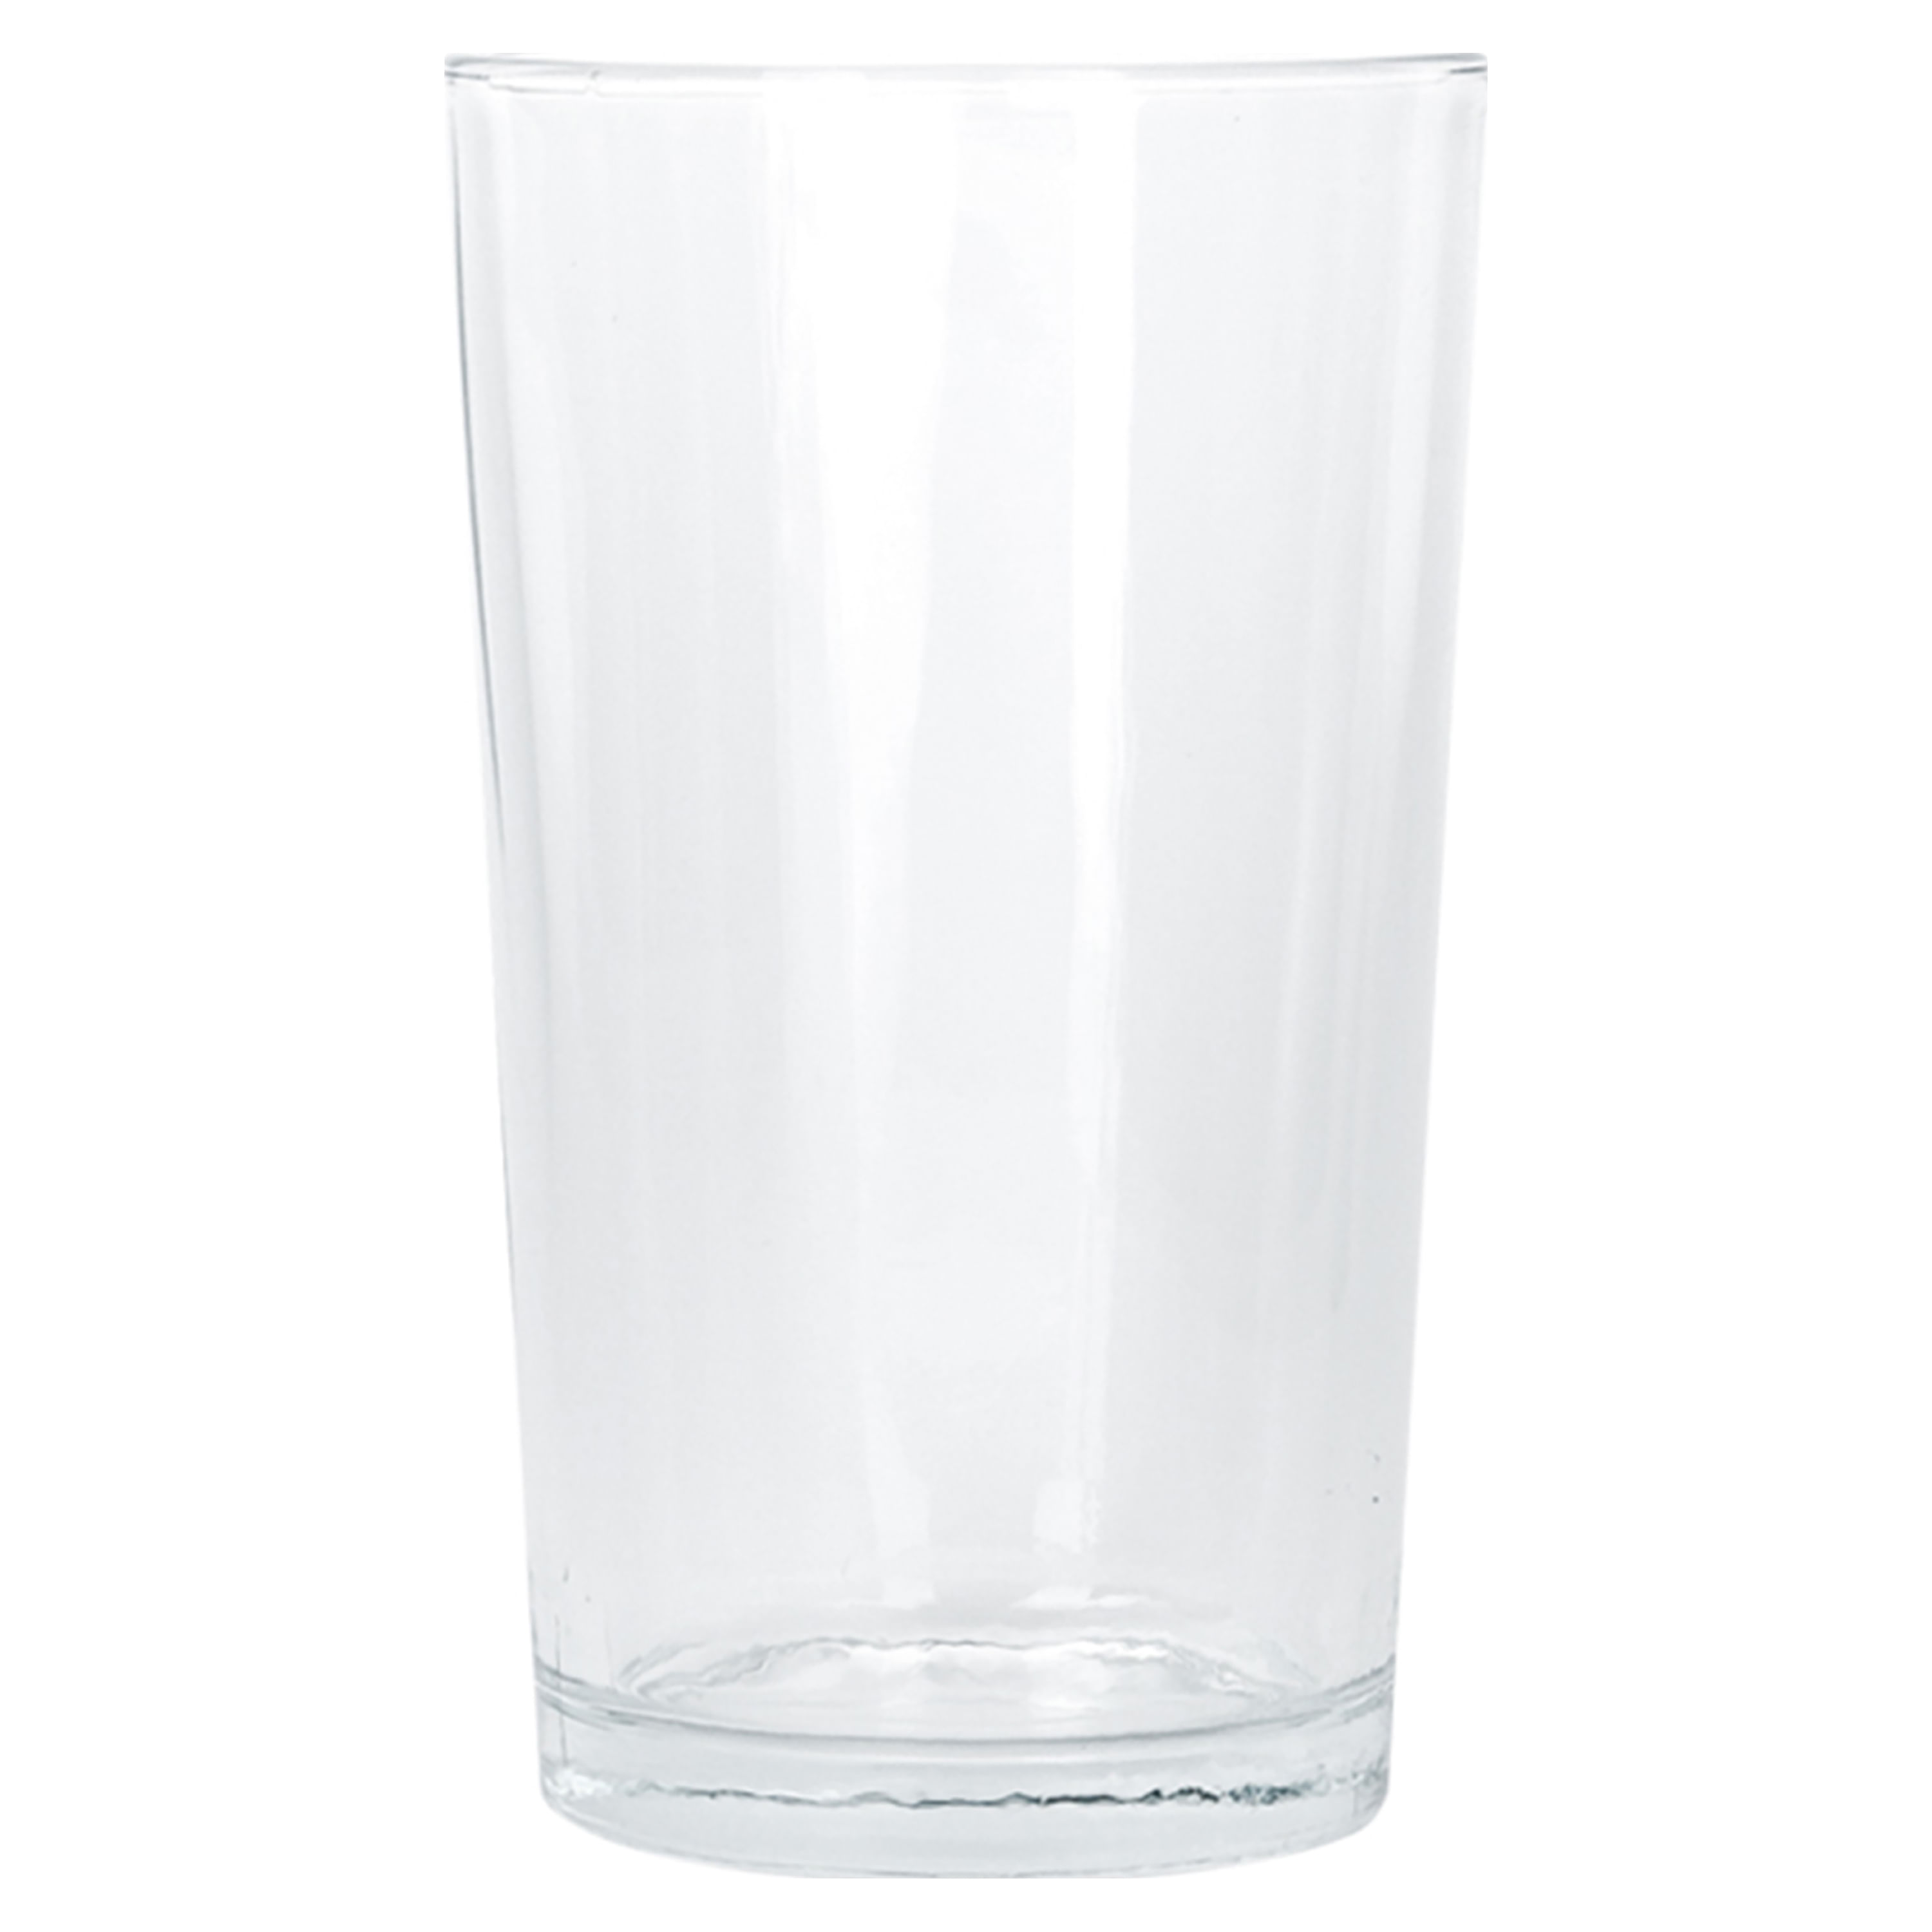 Set de 6 vasos de cristal 295 ml, modelo París, juego de vasos